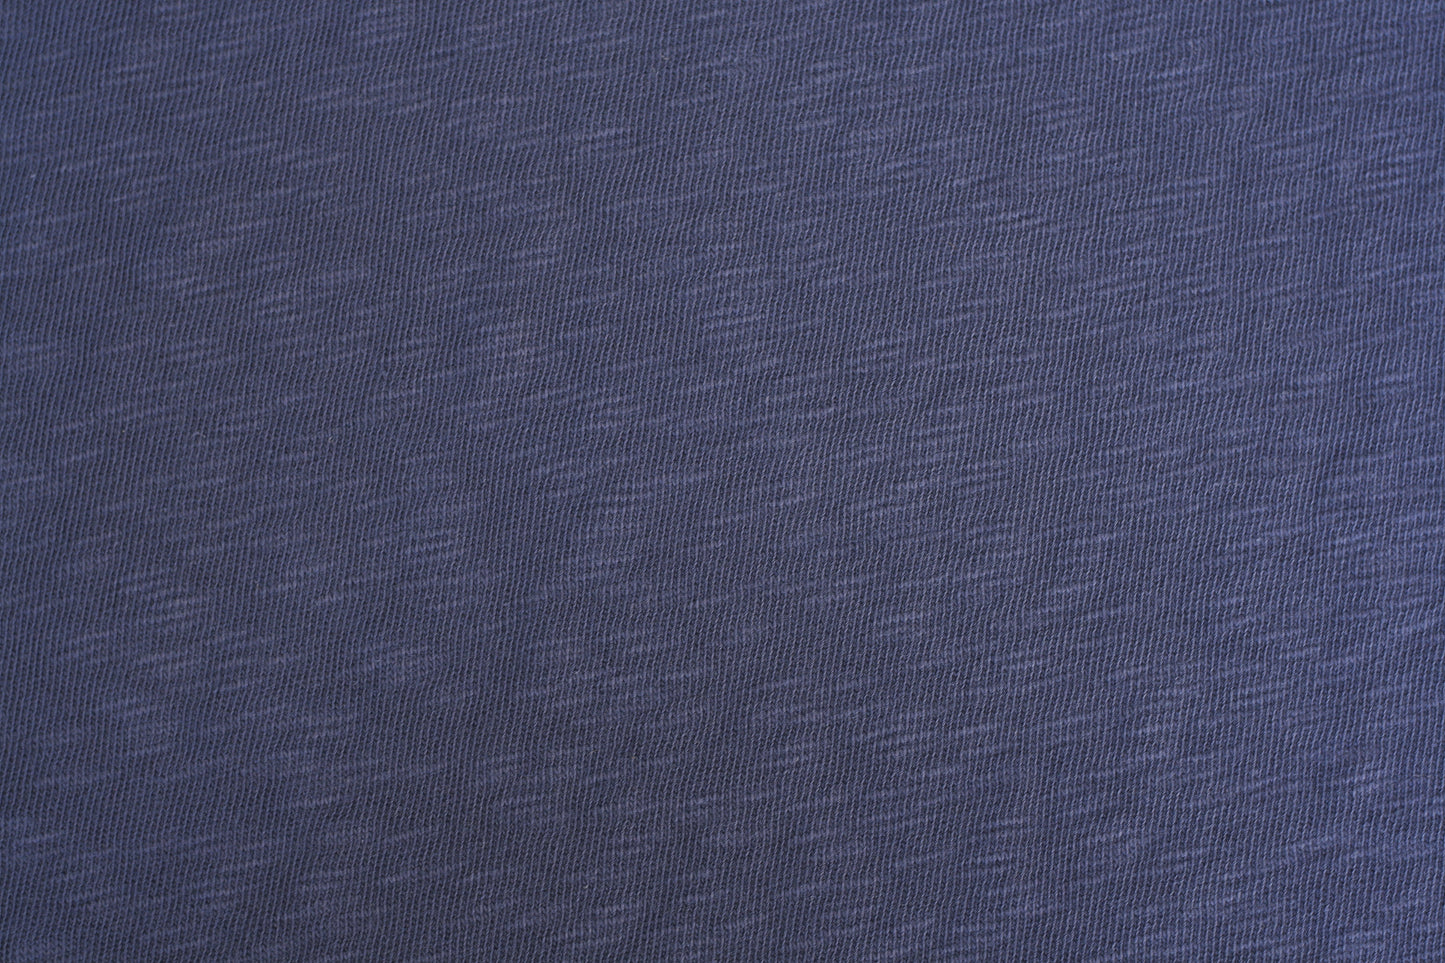 Textured Cotton Sweater Knit - Navy (1/2 yard)